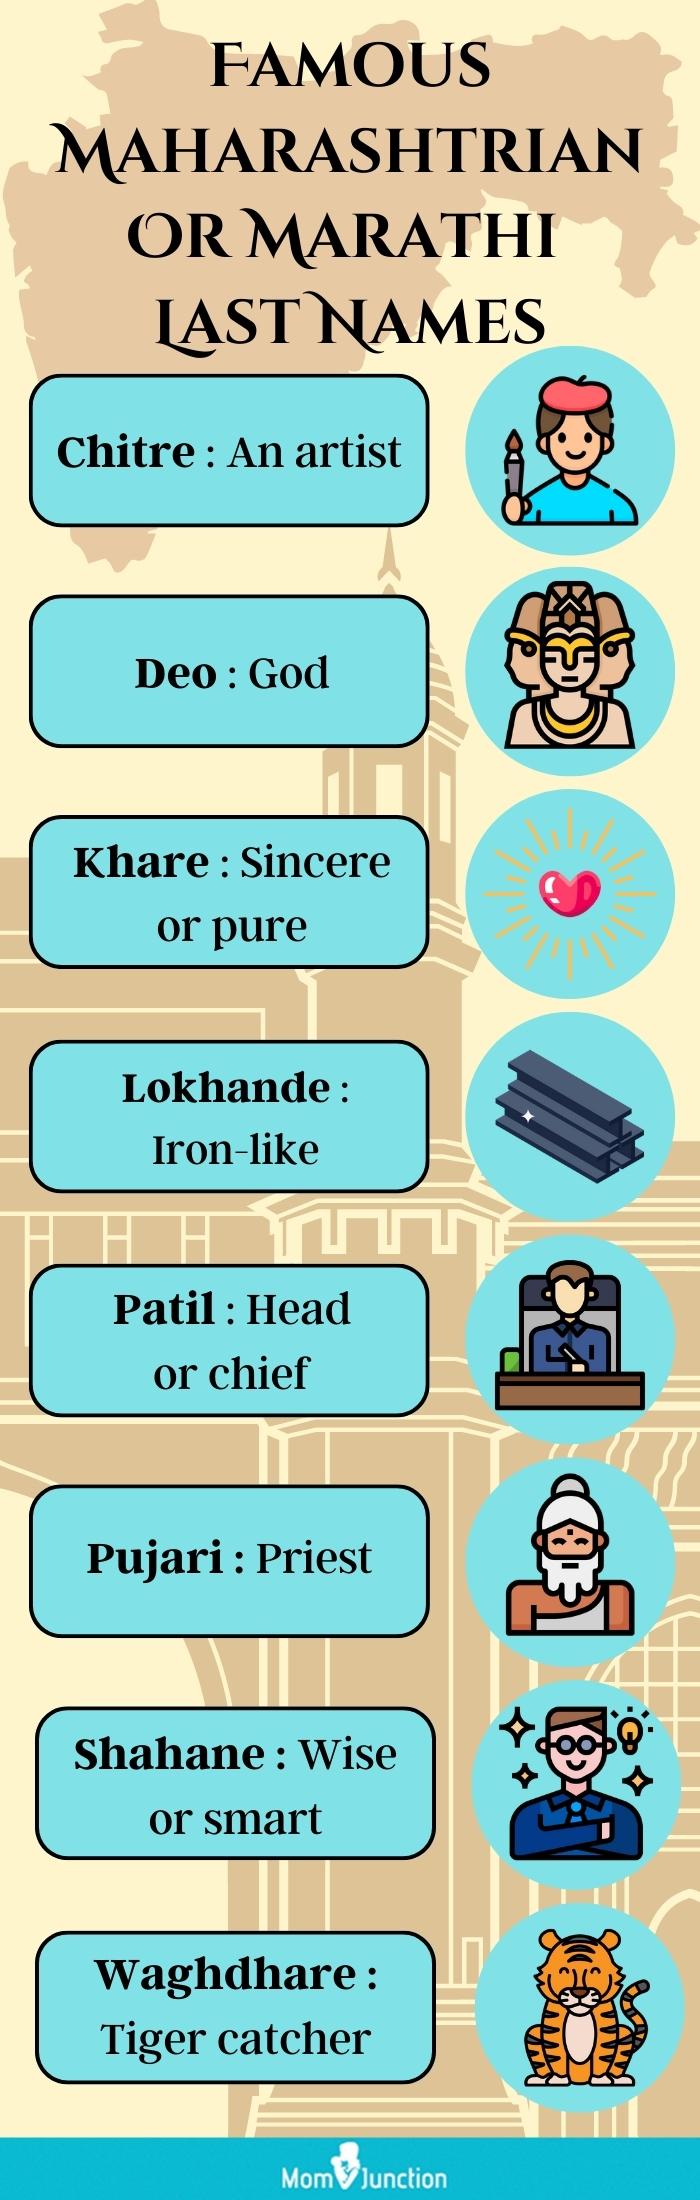 marathi last names [infographic]